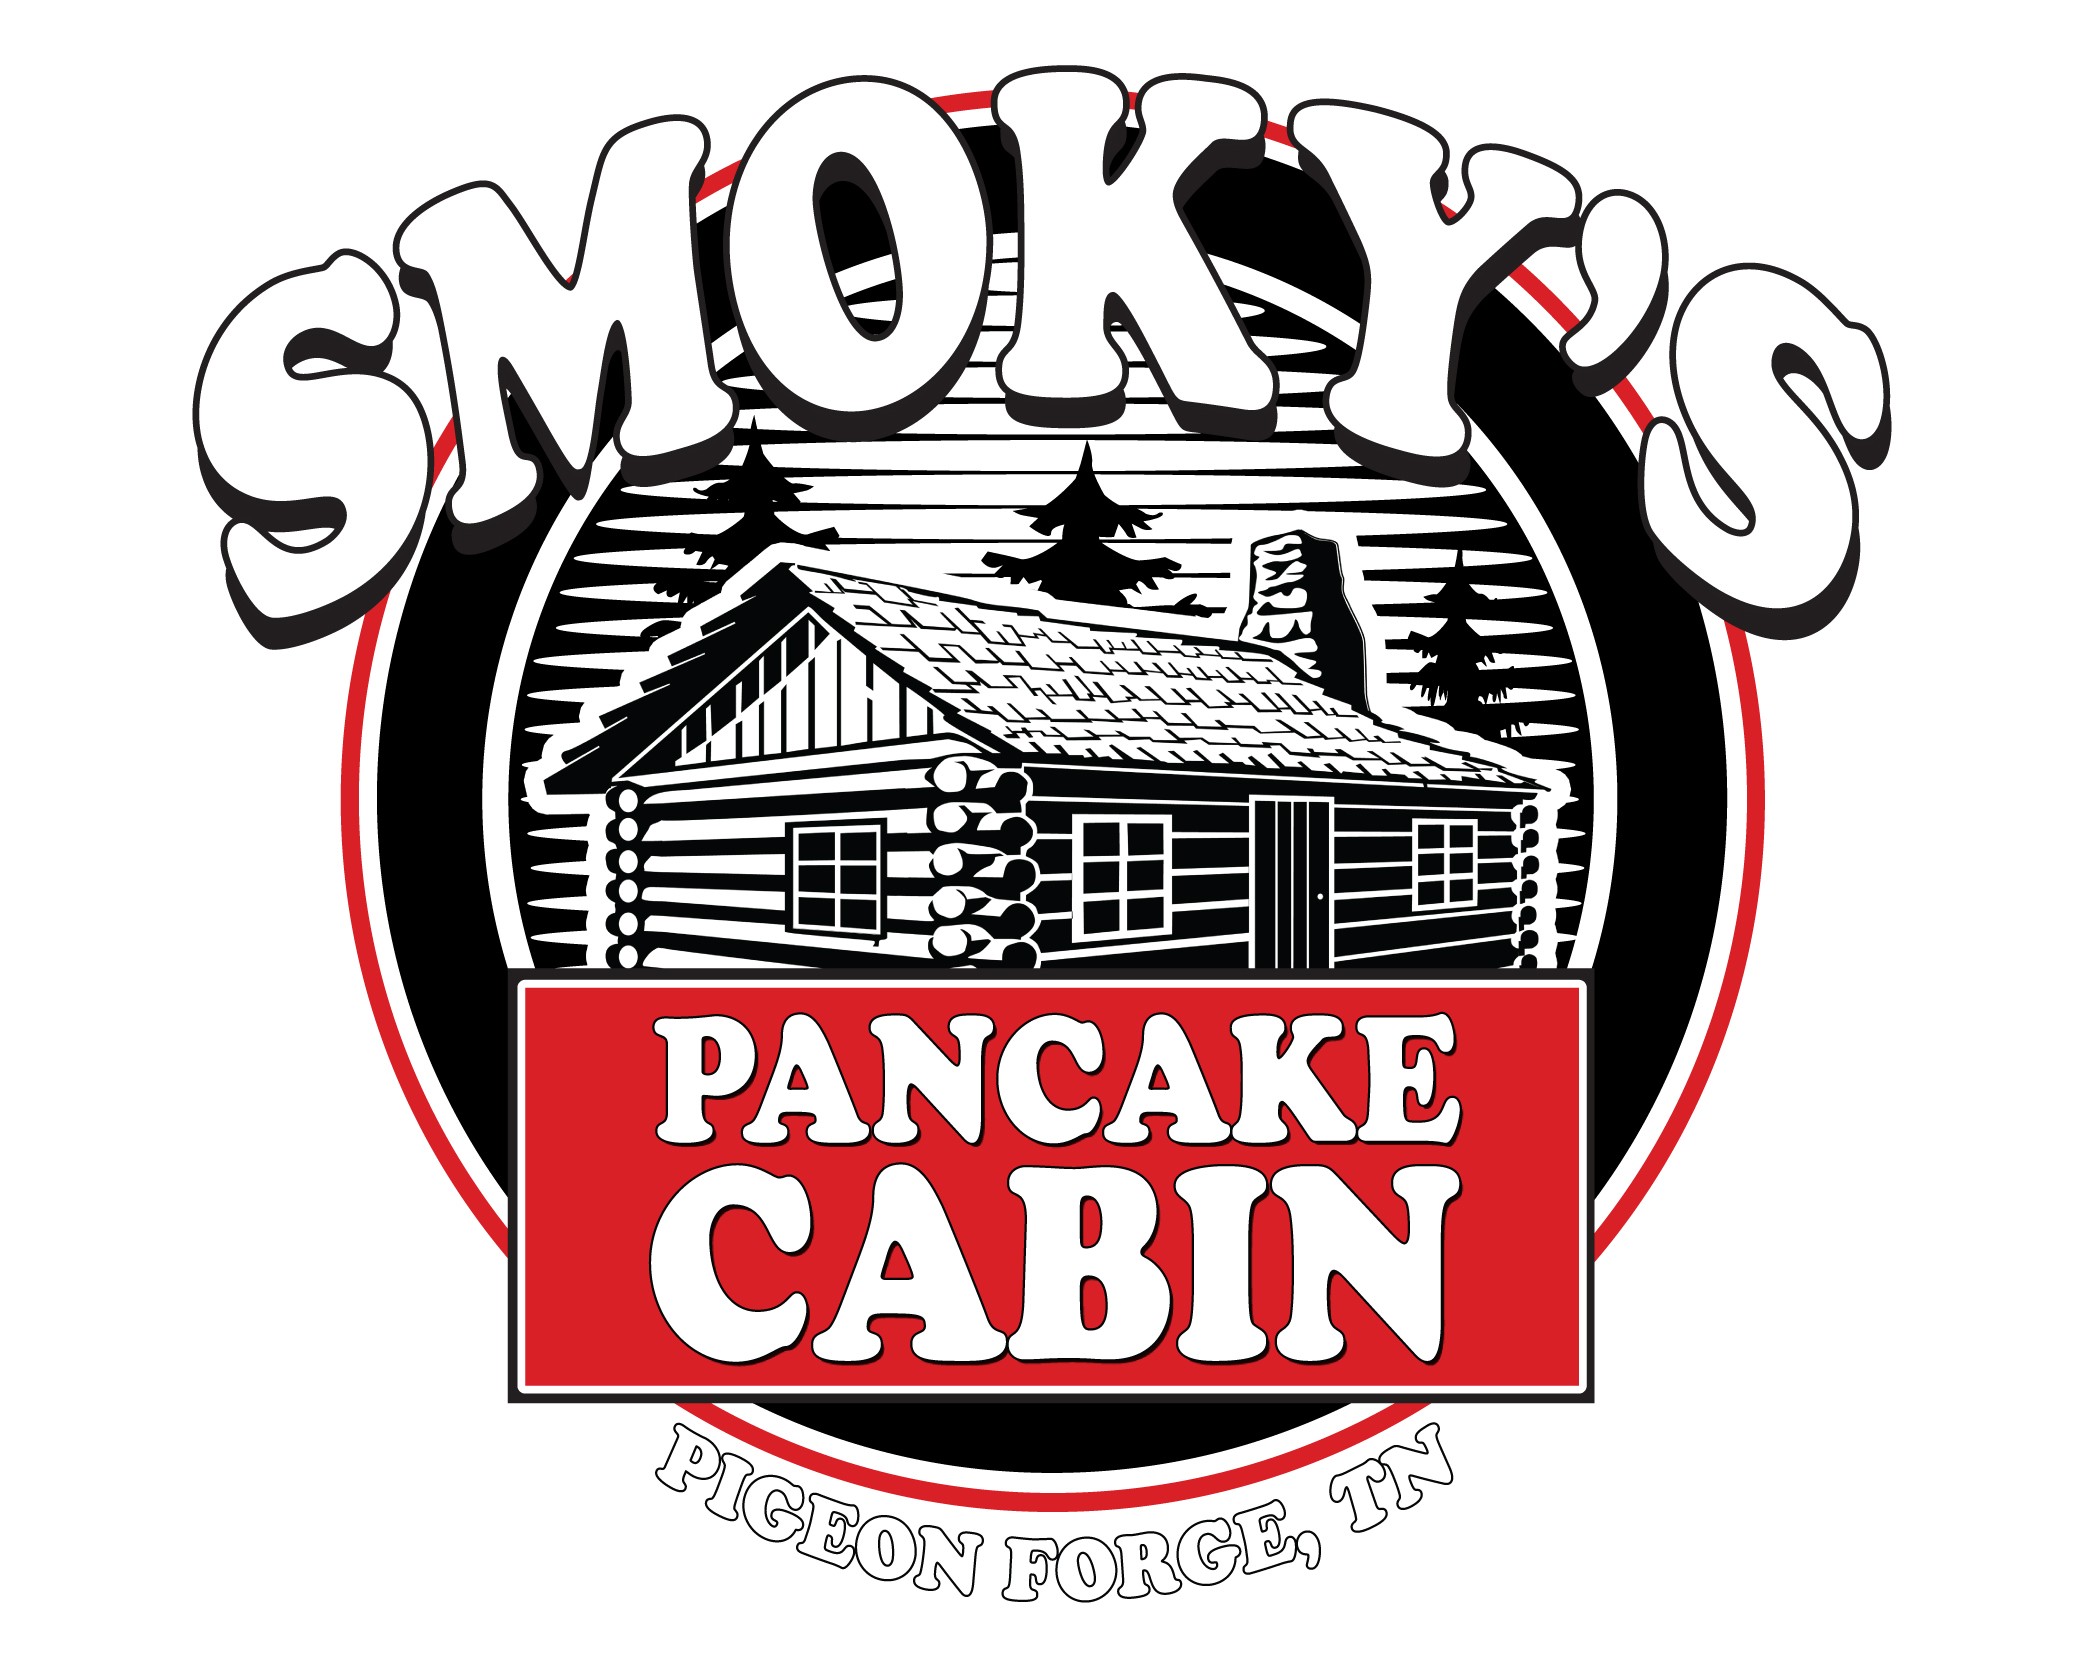 Smoky's Pancake Cabin DO NOT USE